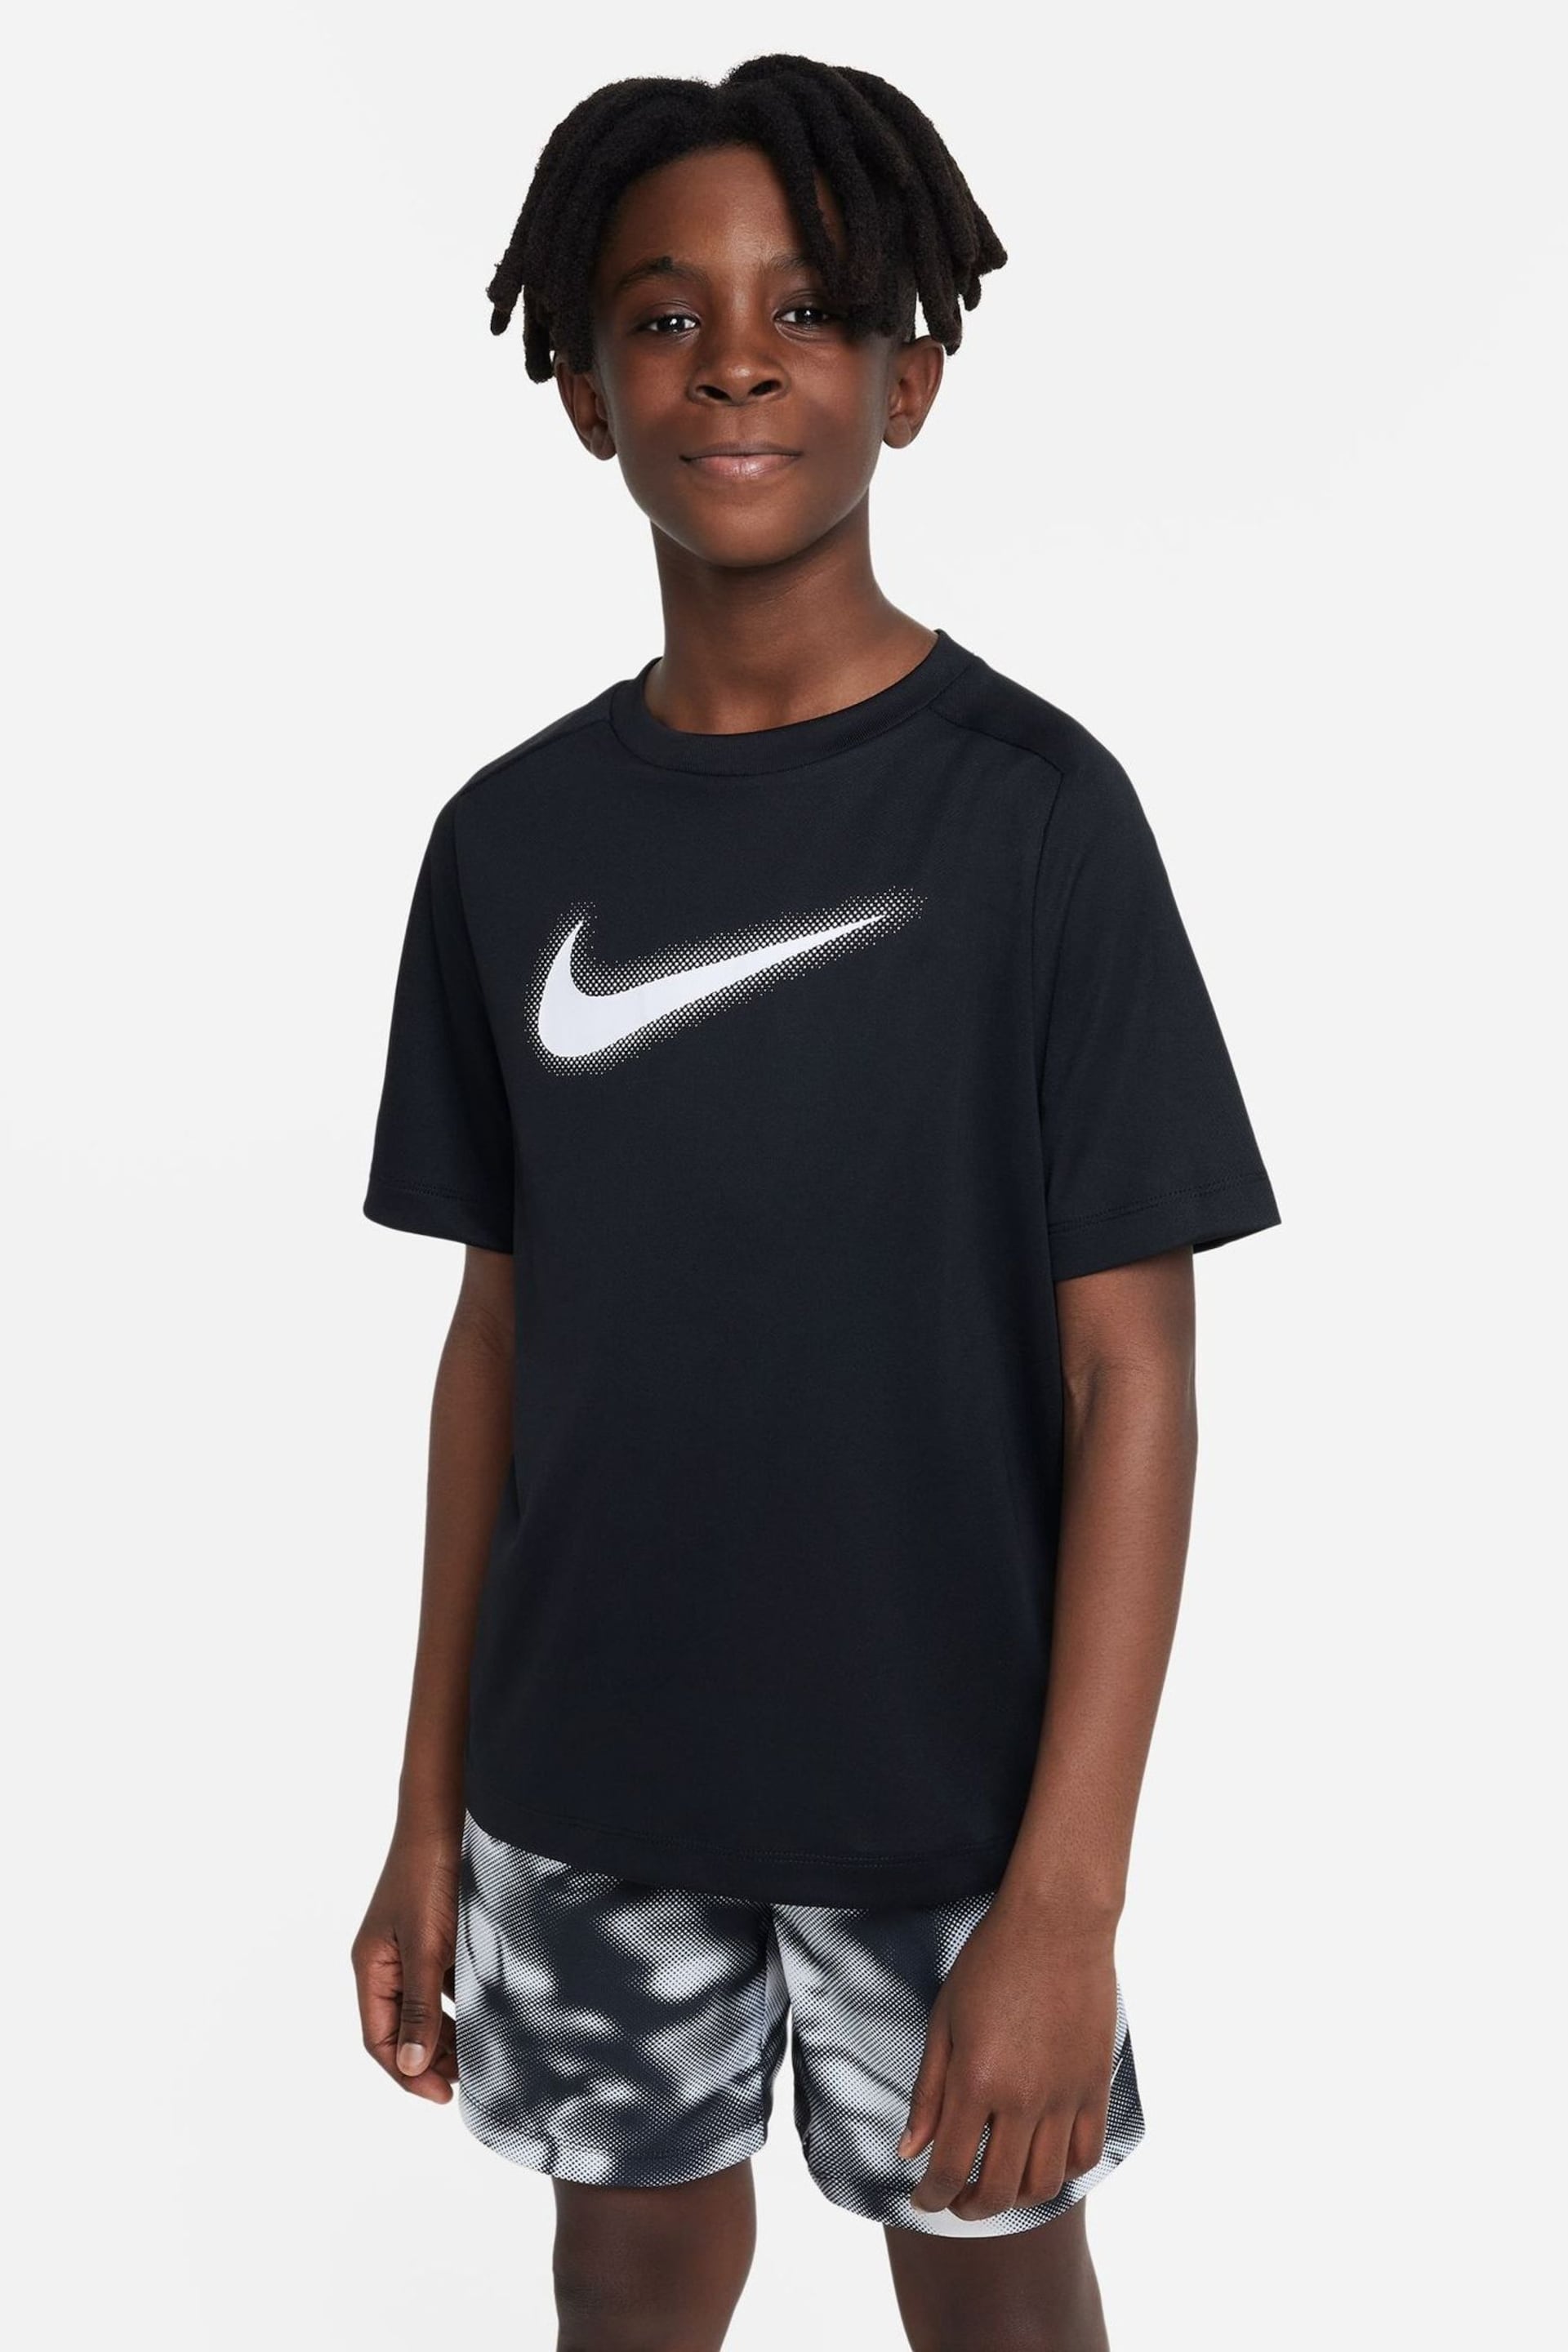 Nike Black Dri-FIT Multi Graphic Training T-Shirt - Image 1 of 4